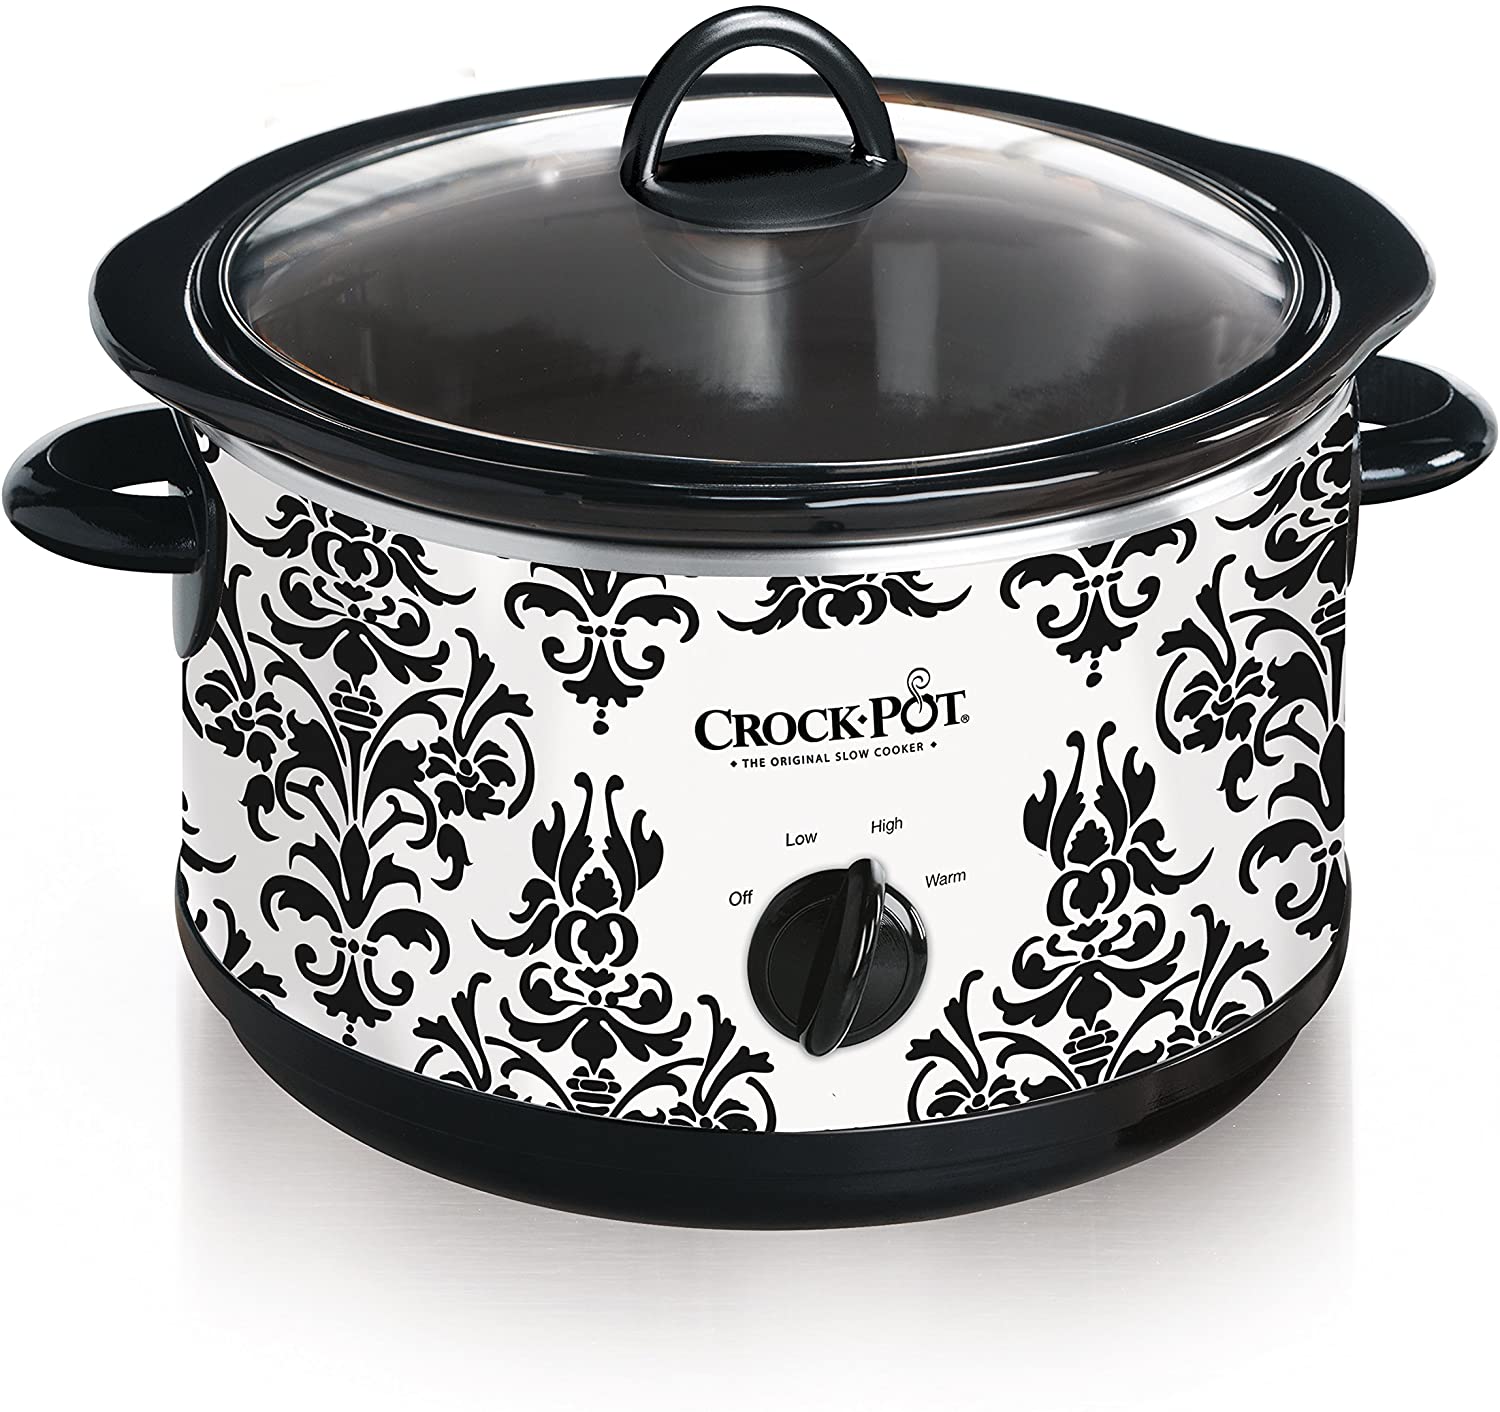 Review of Crock Pot 4.5 Quart Manual Slow Cooker, Damask Pattern